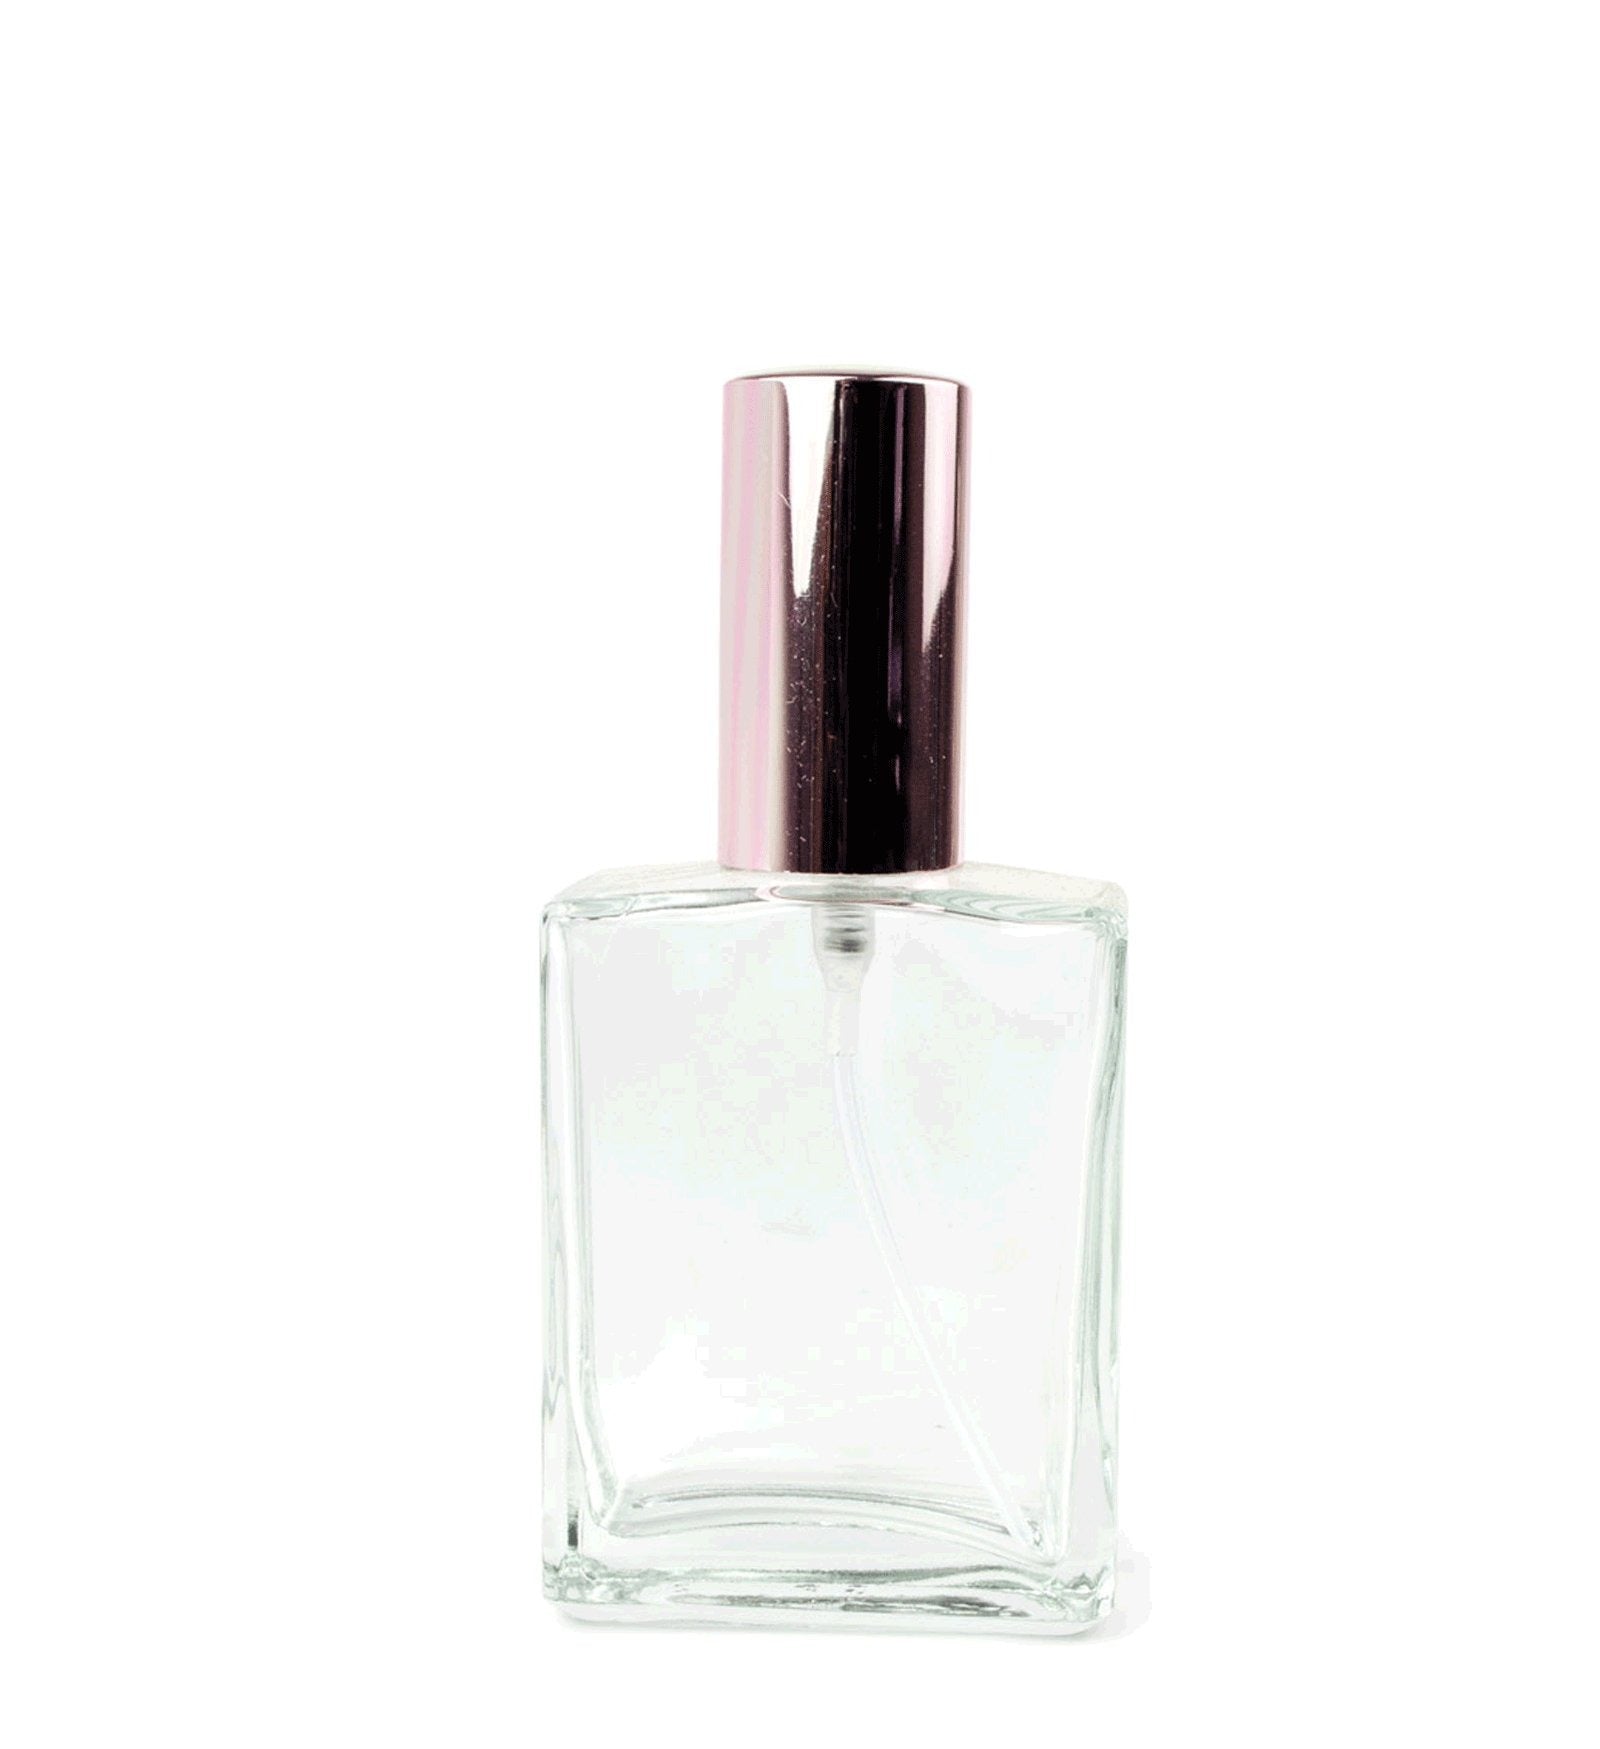 30ml Colorful Perfume Atomizer Glass Perfume Bottles Atomizer Empty Spray  Simple Design With Sprayer LX1302